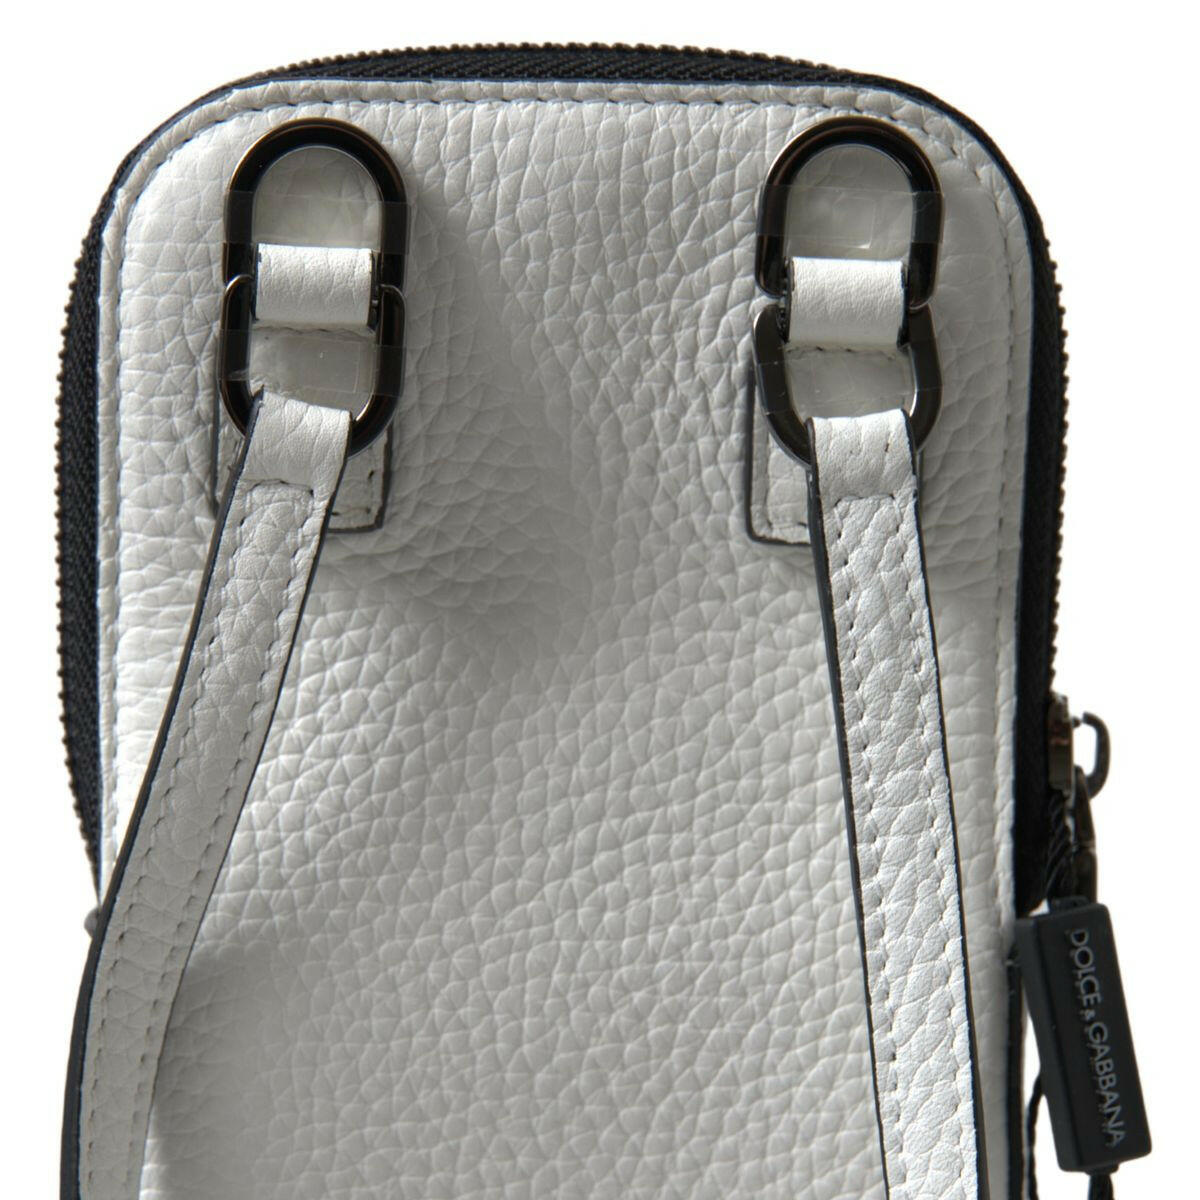 Dolce & Gabbana White Leather Purse Crossbody Sling Phone Bag - GENUINE AUTHENTIC BRAND LLC  